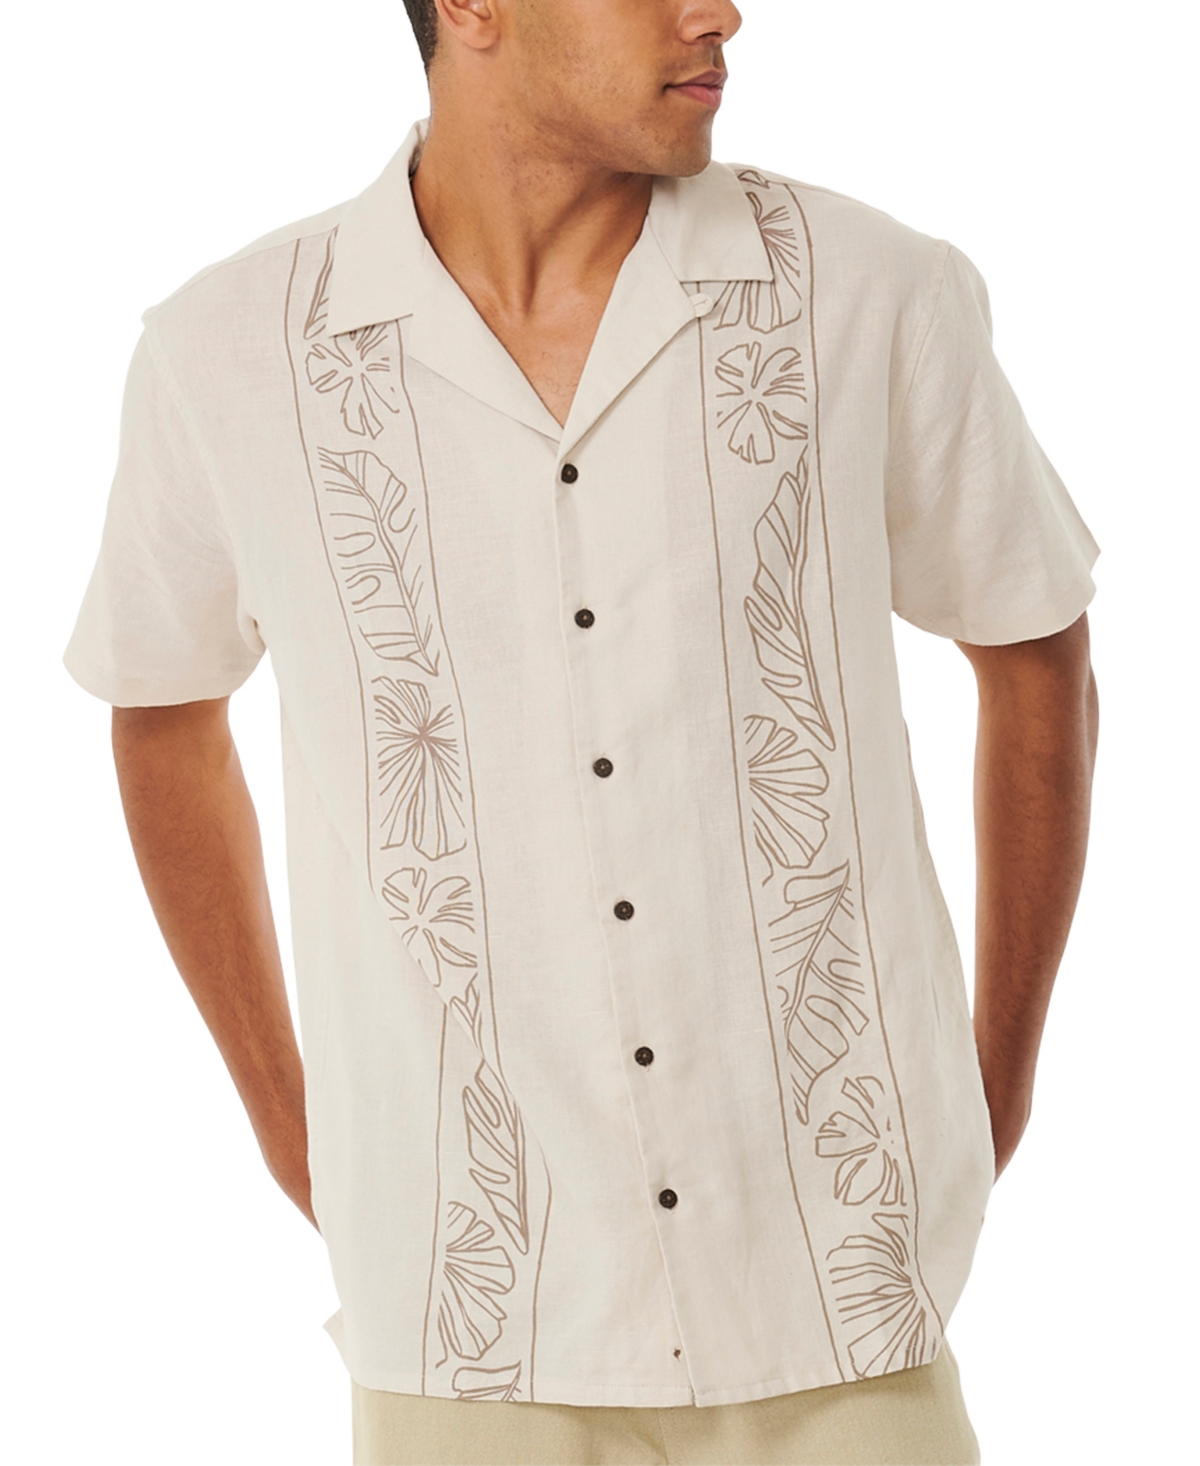 Men's Mod Tropics Vert Short Sleeve Shirt - Vintage White